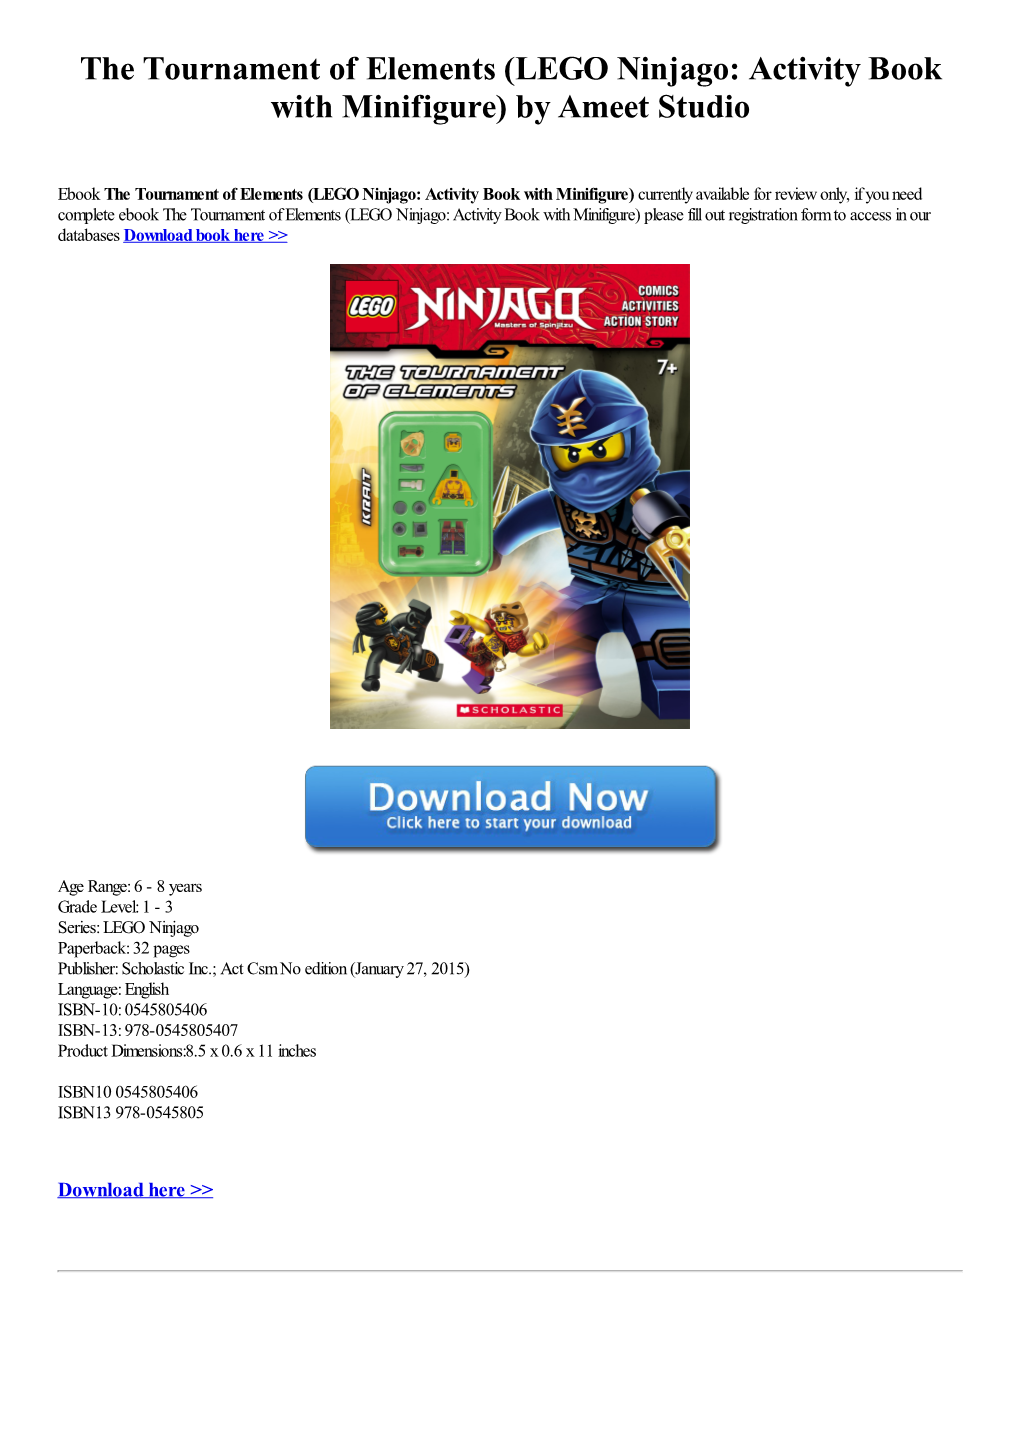 (LEGO Ninjago: Activity Book with Minifigure) by Ameet Studio Ebook